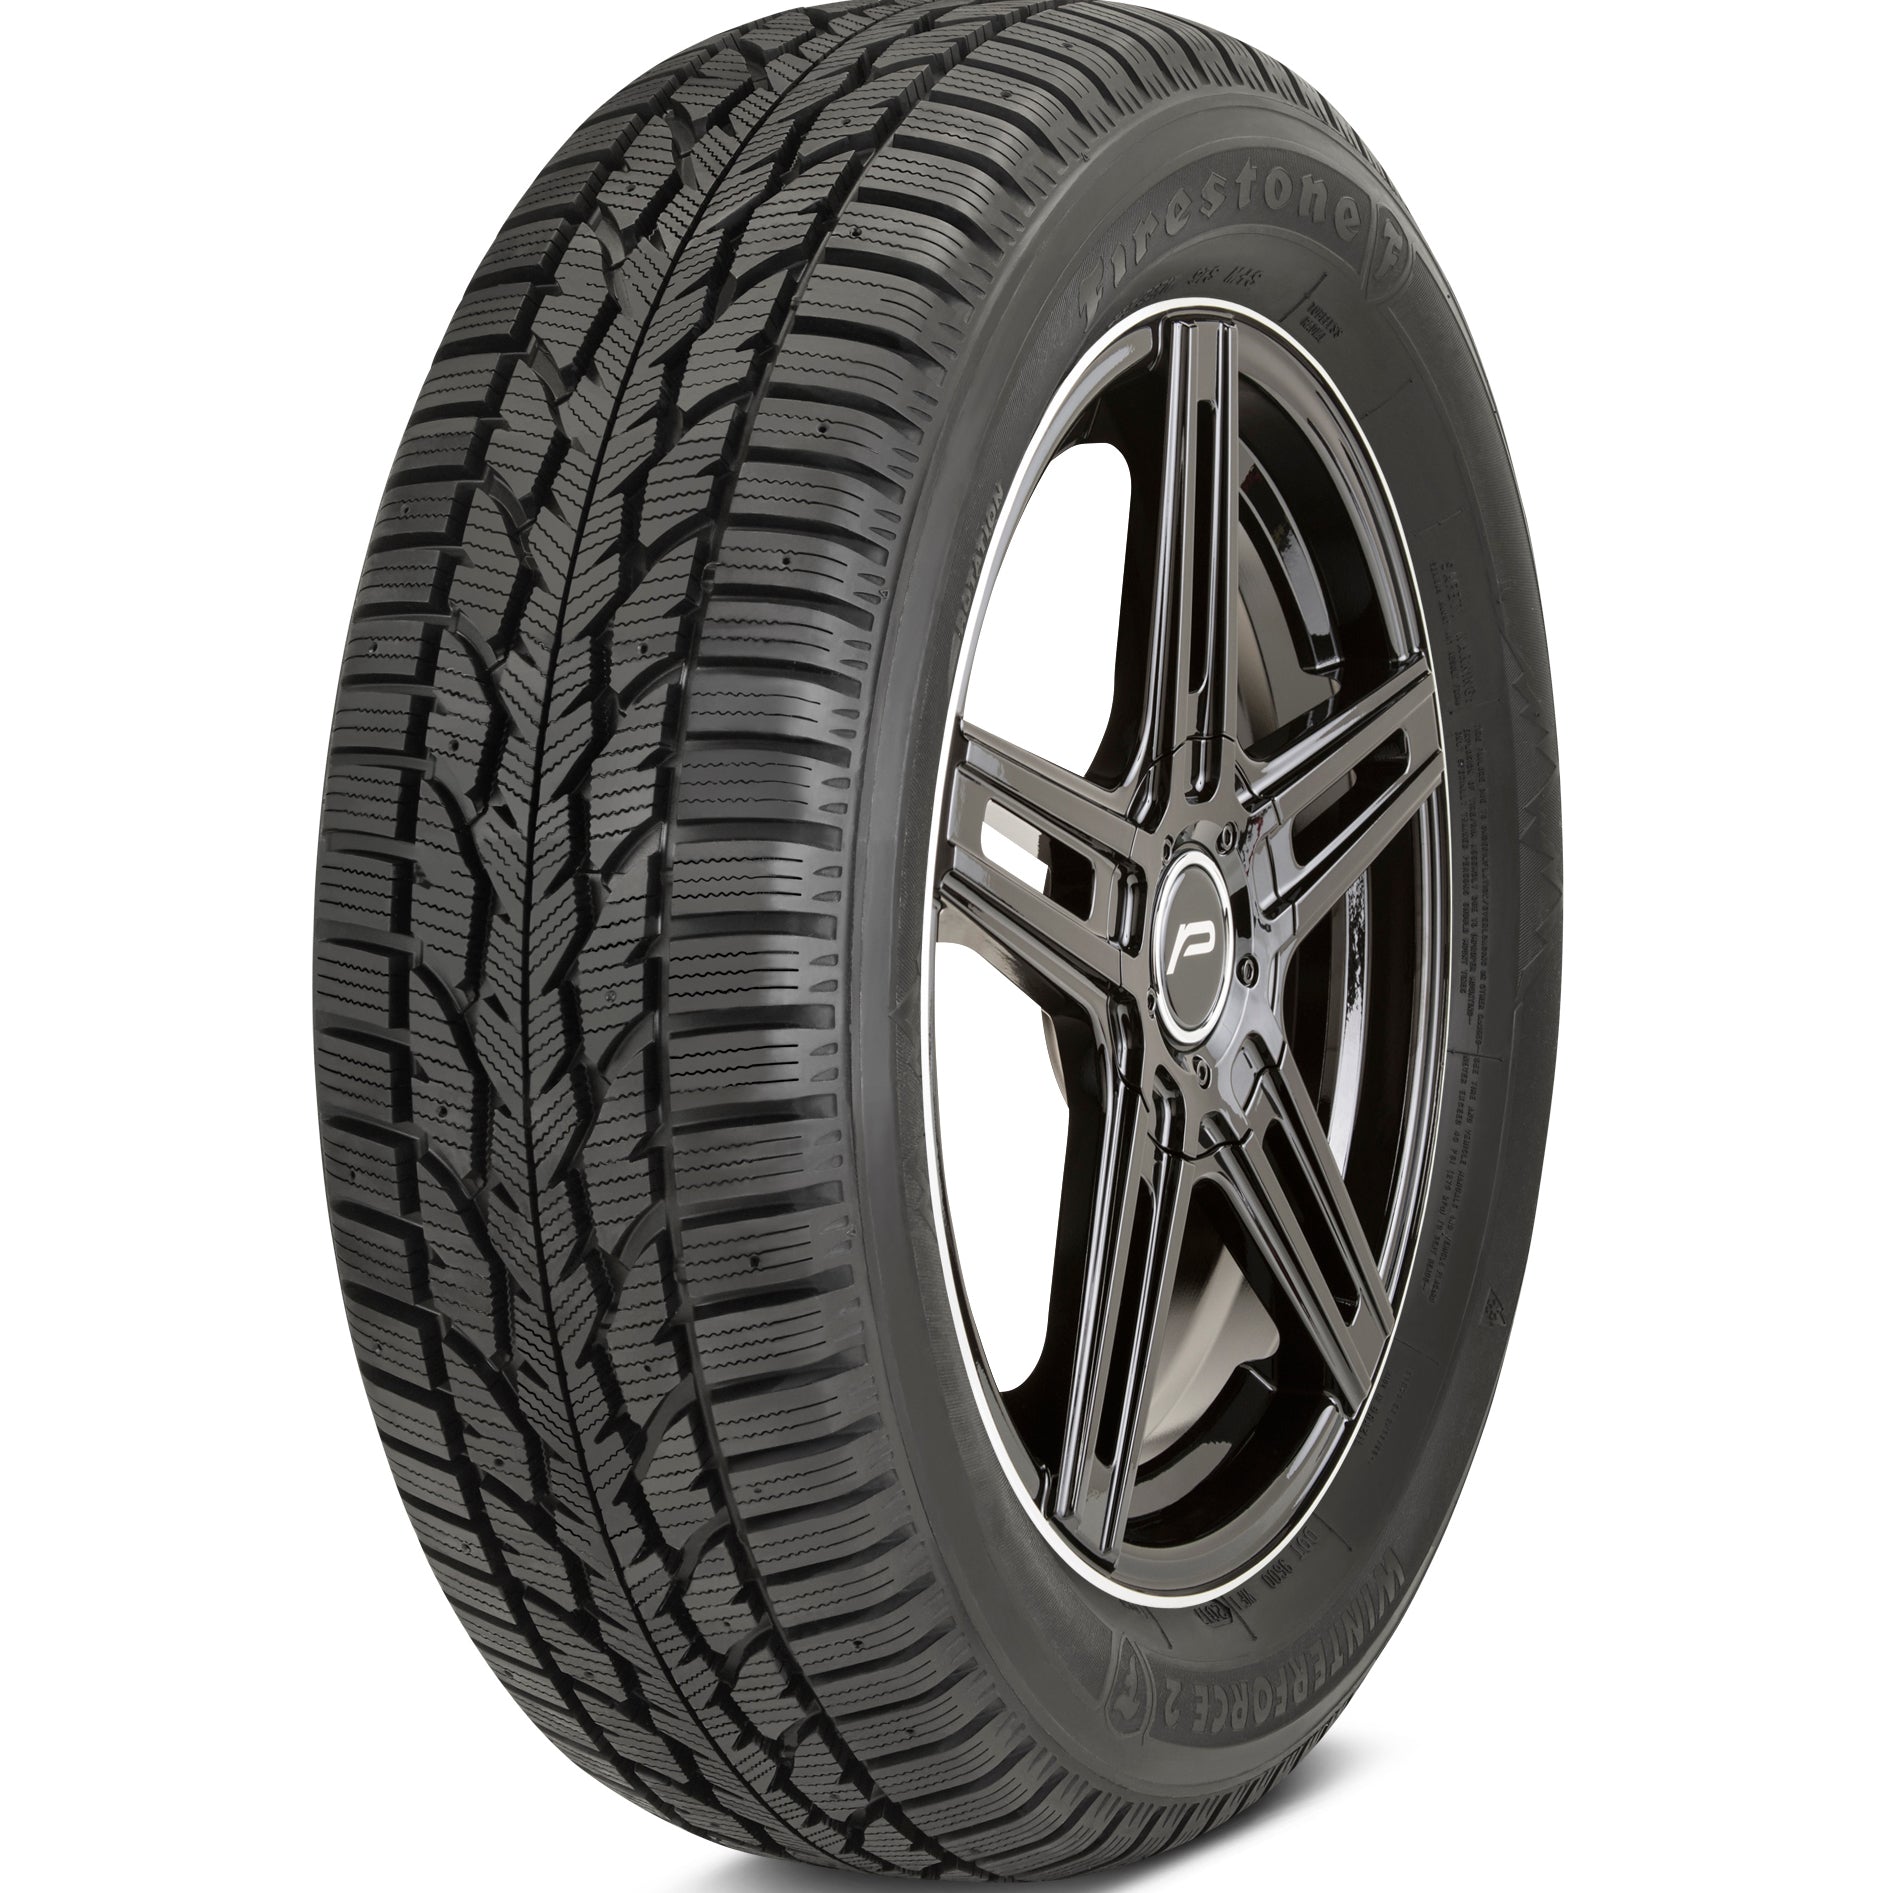 FIRESTONE WINTERFORCE2 205/55R16 (24.9X8.1R 16) Tires